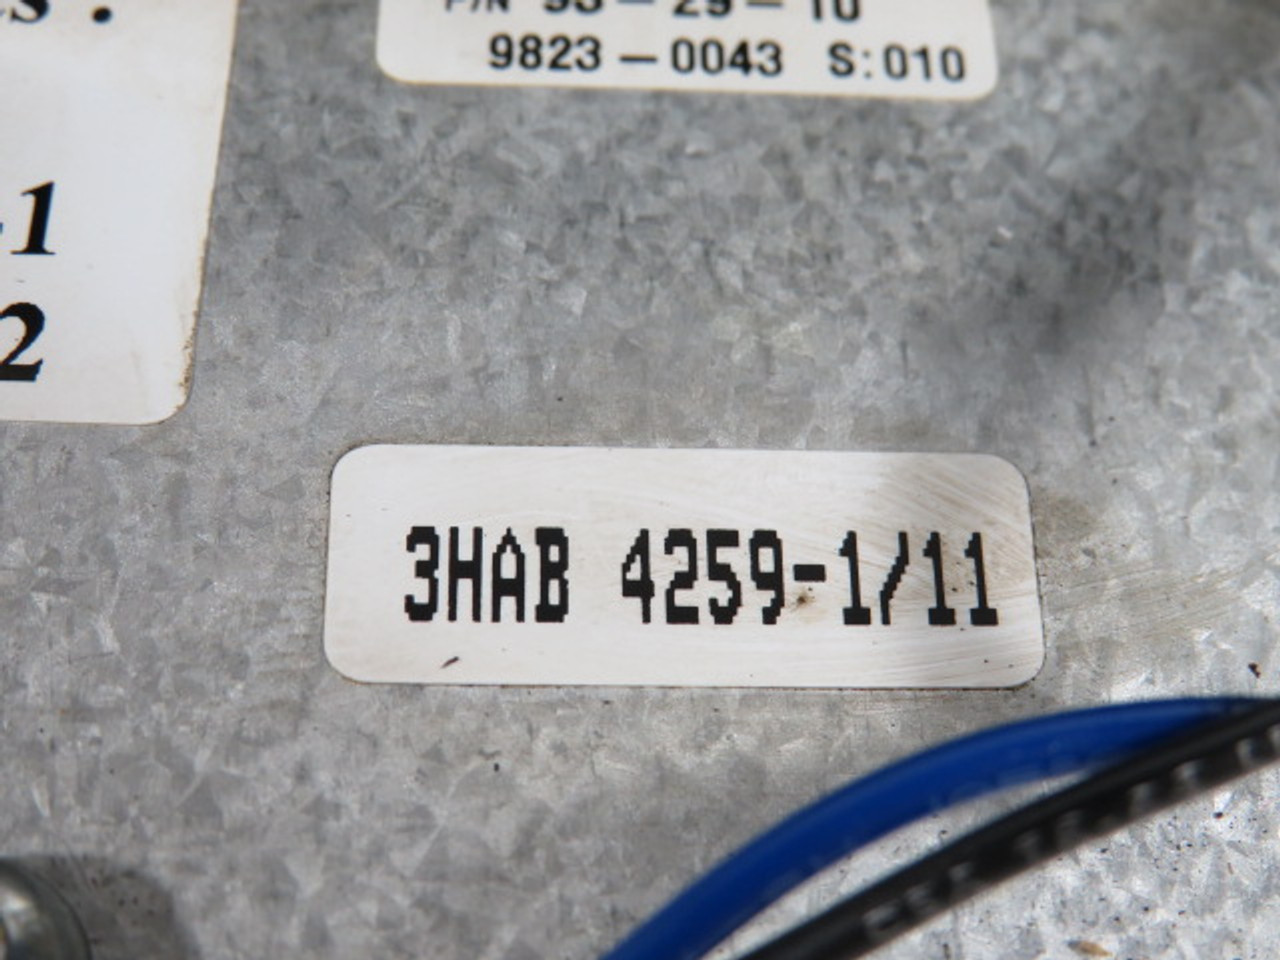 ABB 3HAB-4259-1/11 Robot Measurement Module USED